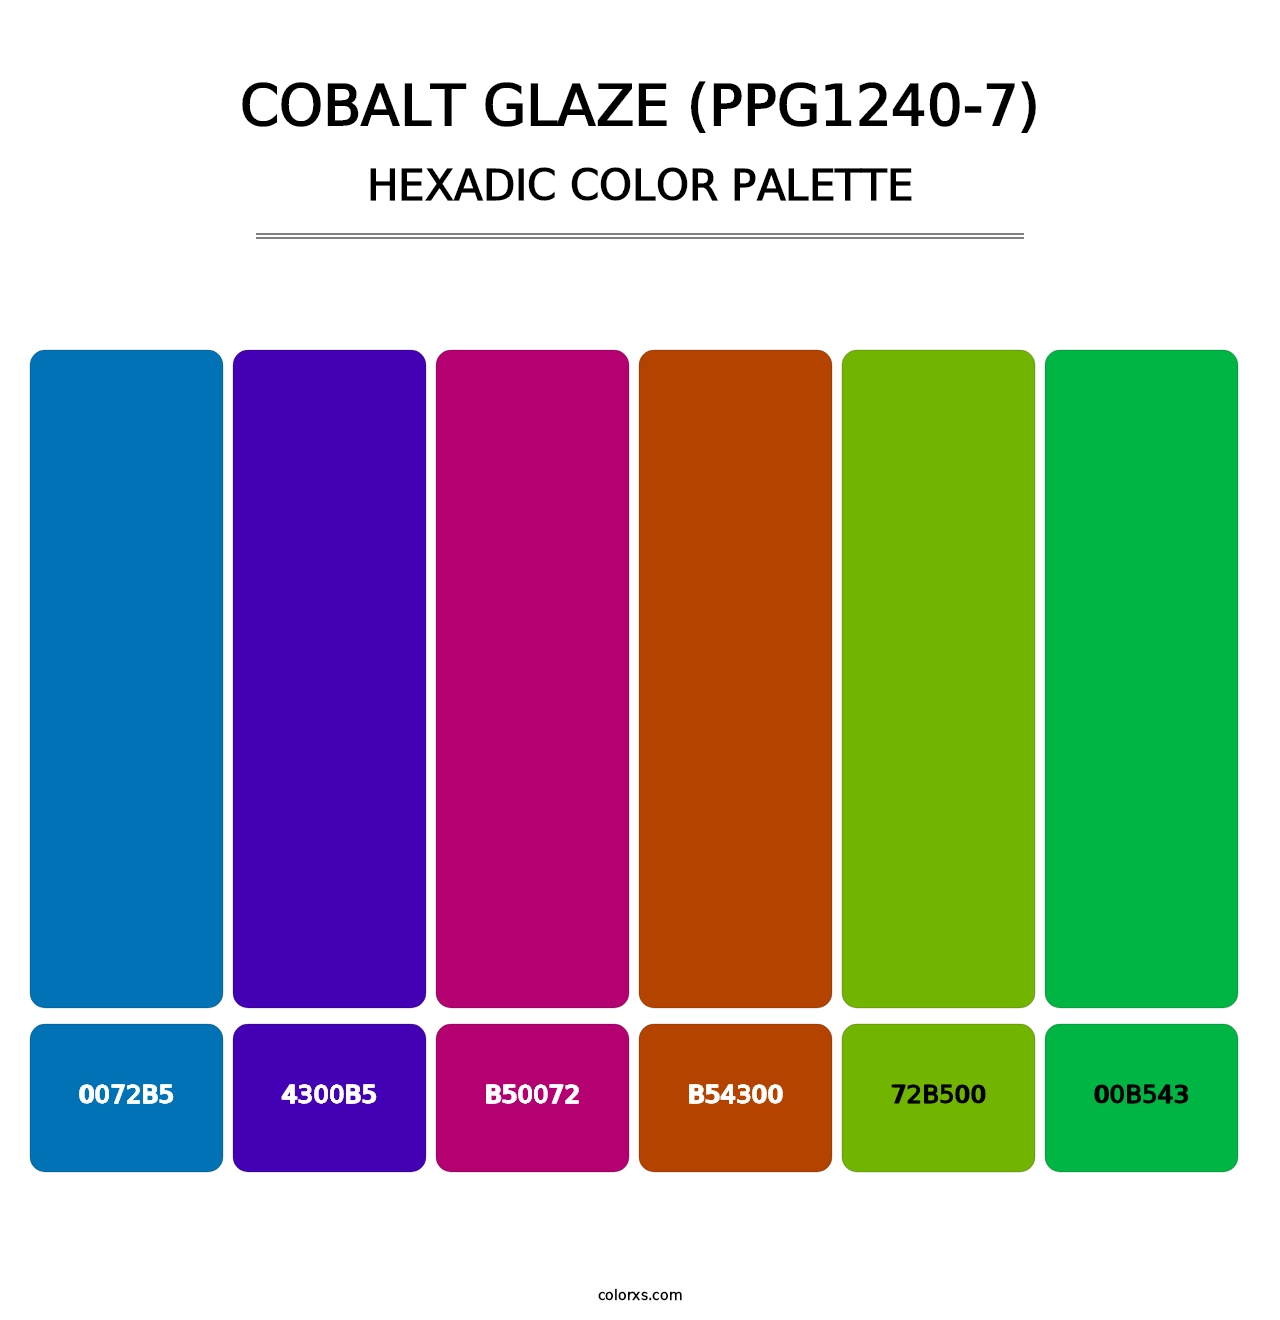 Cobalt Glaze (PPG1240-7) - Hexadic Color Palette